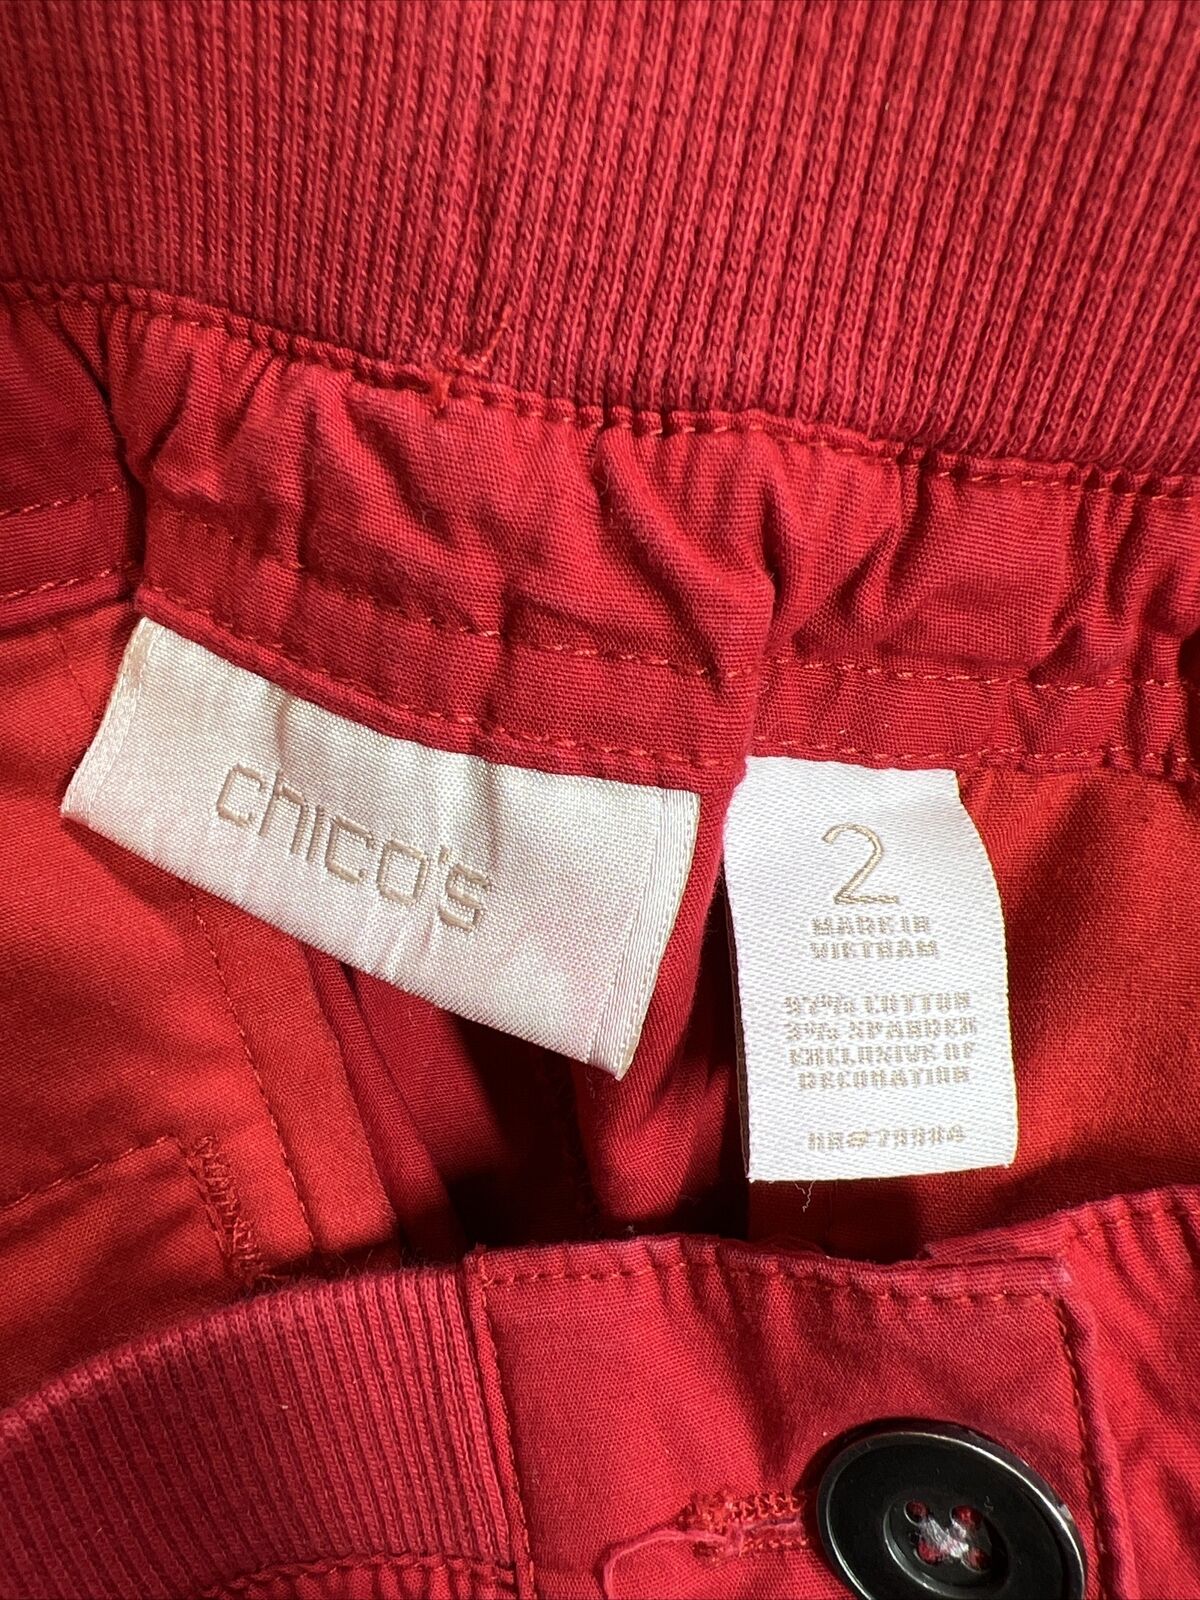 Chico's Women's Red Stretch Waist Cargo Shorts - 2/ US 12